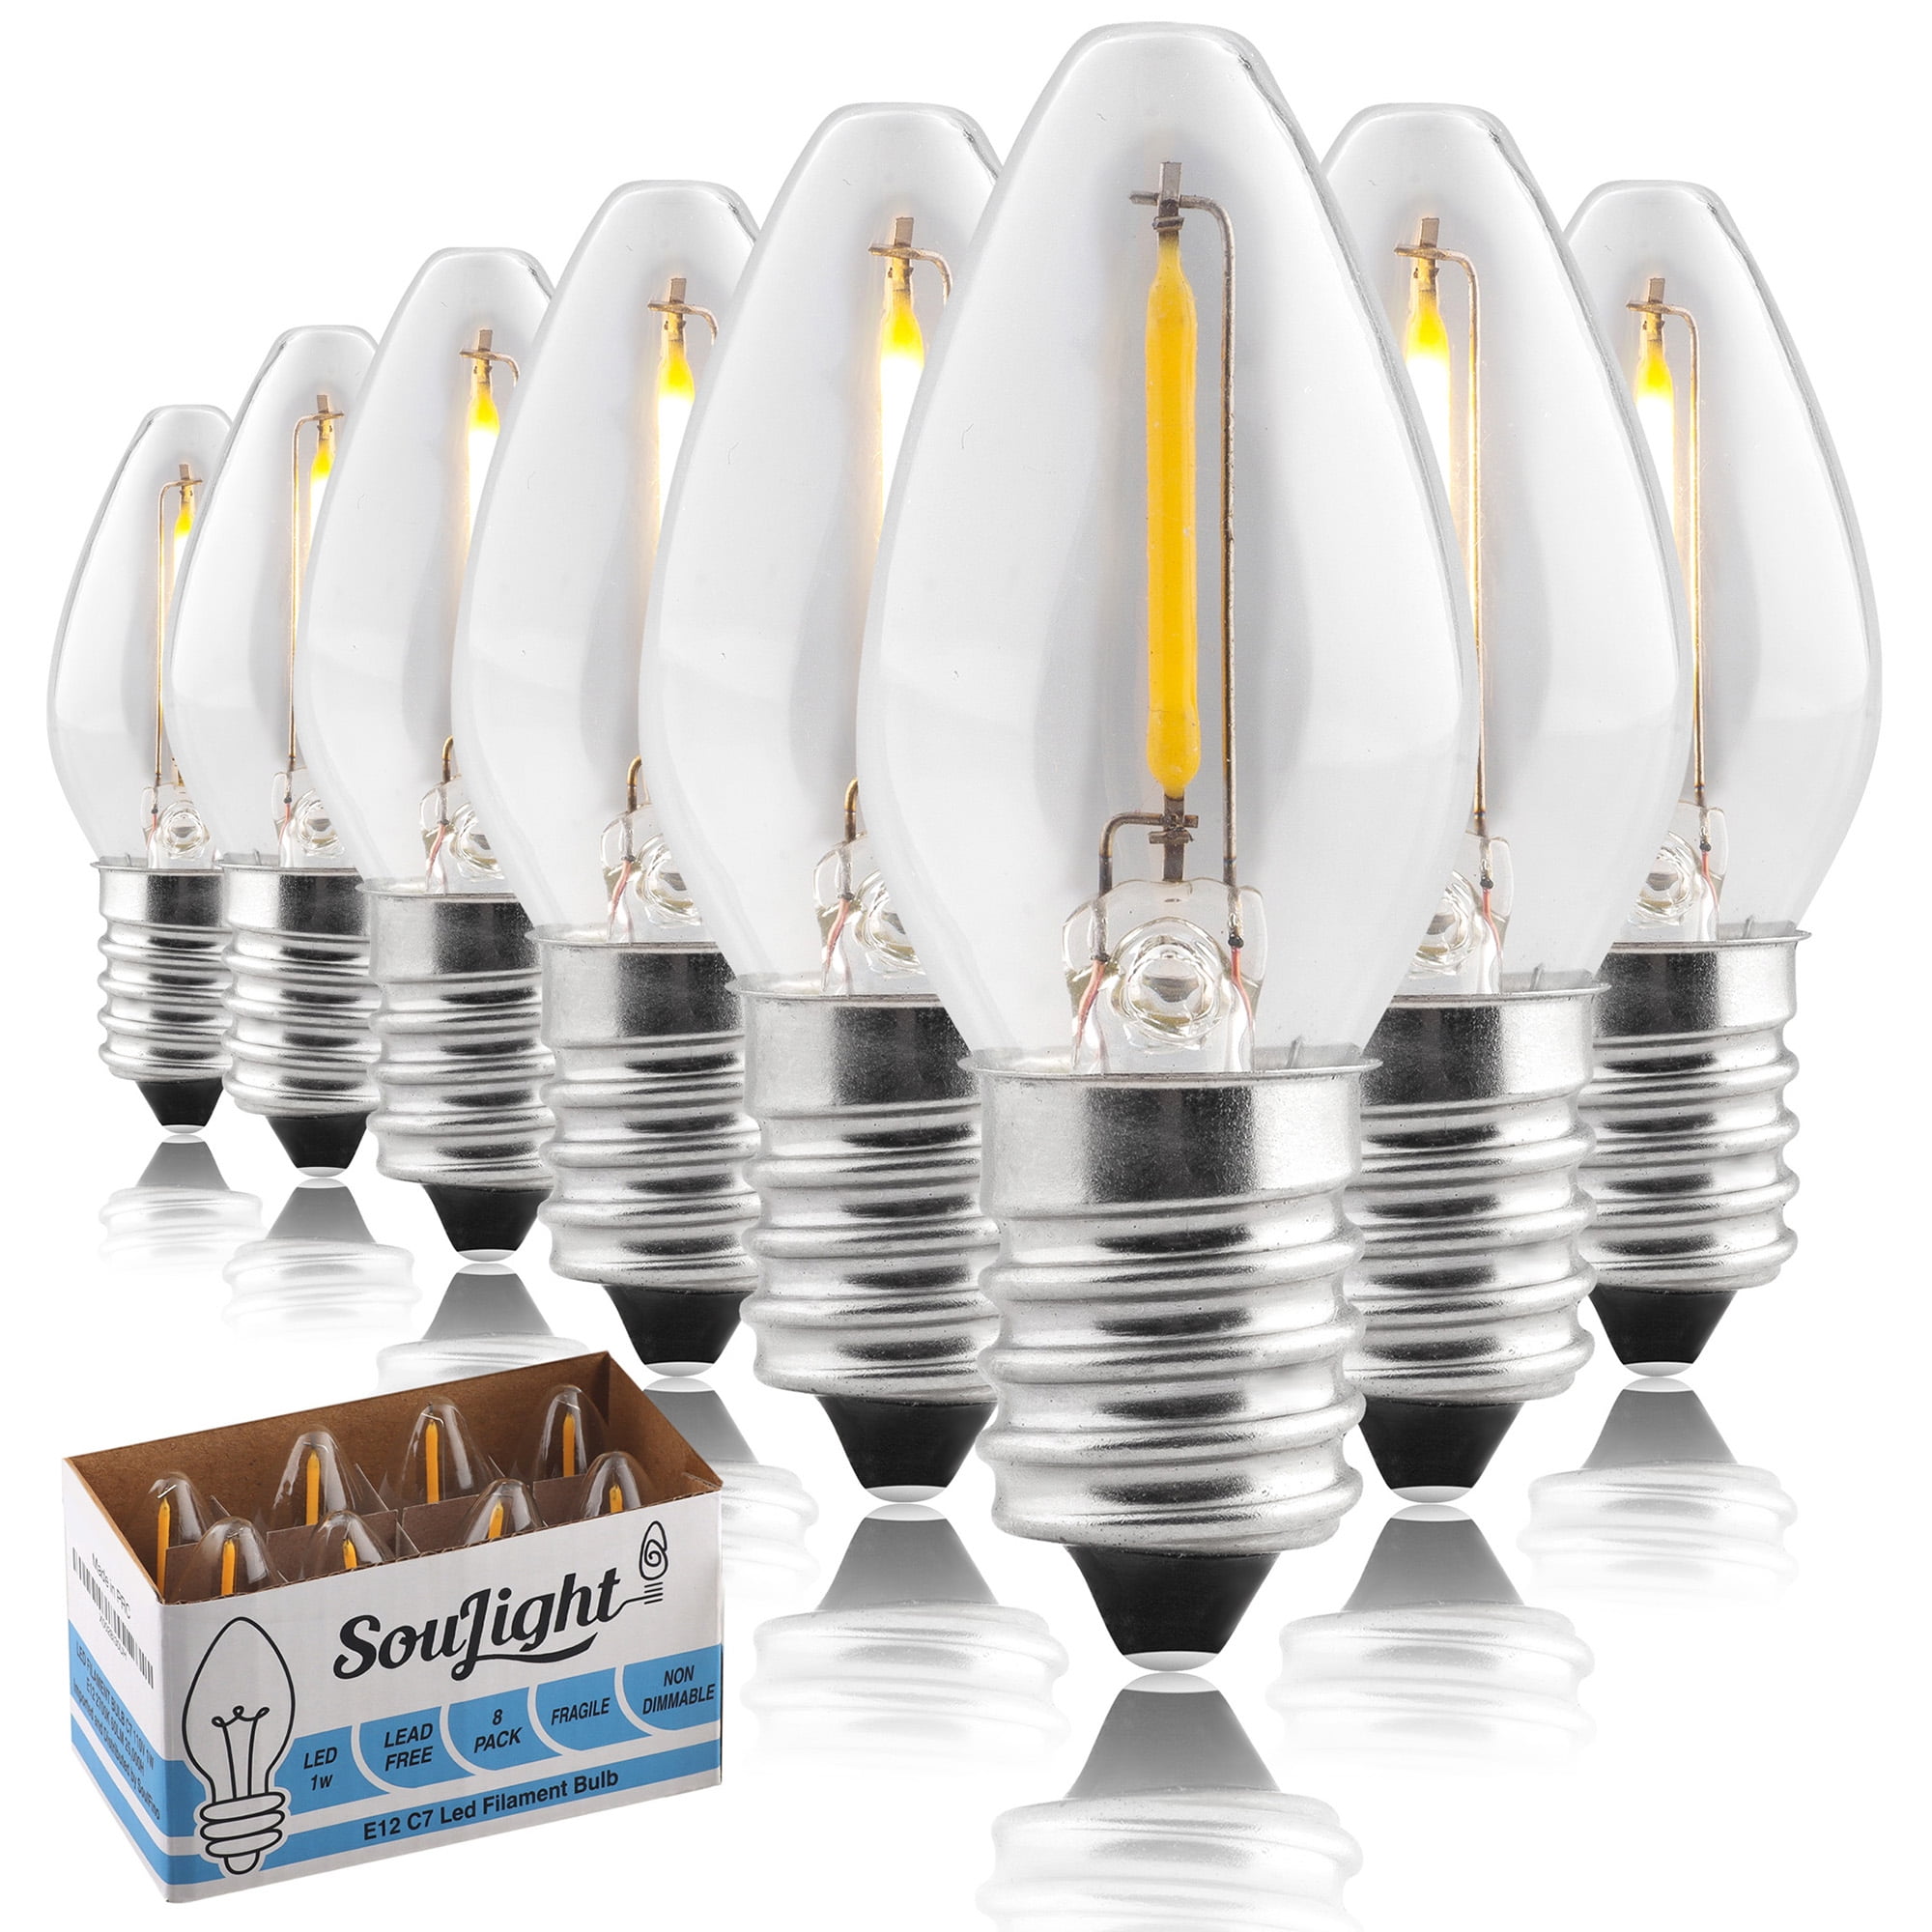 bloed waarschijnlijk Superioriteit Soulight LED Night Light Bulb C7 E12 LED Bulbs Candelabra Light Bulbs, 1  Watt Equivalent 10W Incandescent Bulb, Warm White 2700K, Lead Free Base,  Window Candles & Chandeliers Replacement Bulb, 8 Pack -